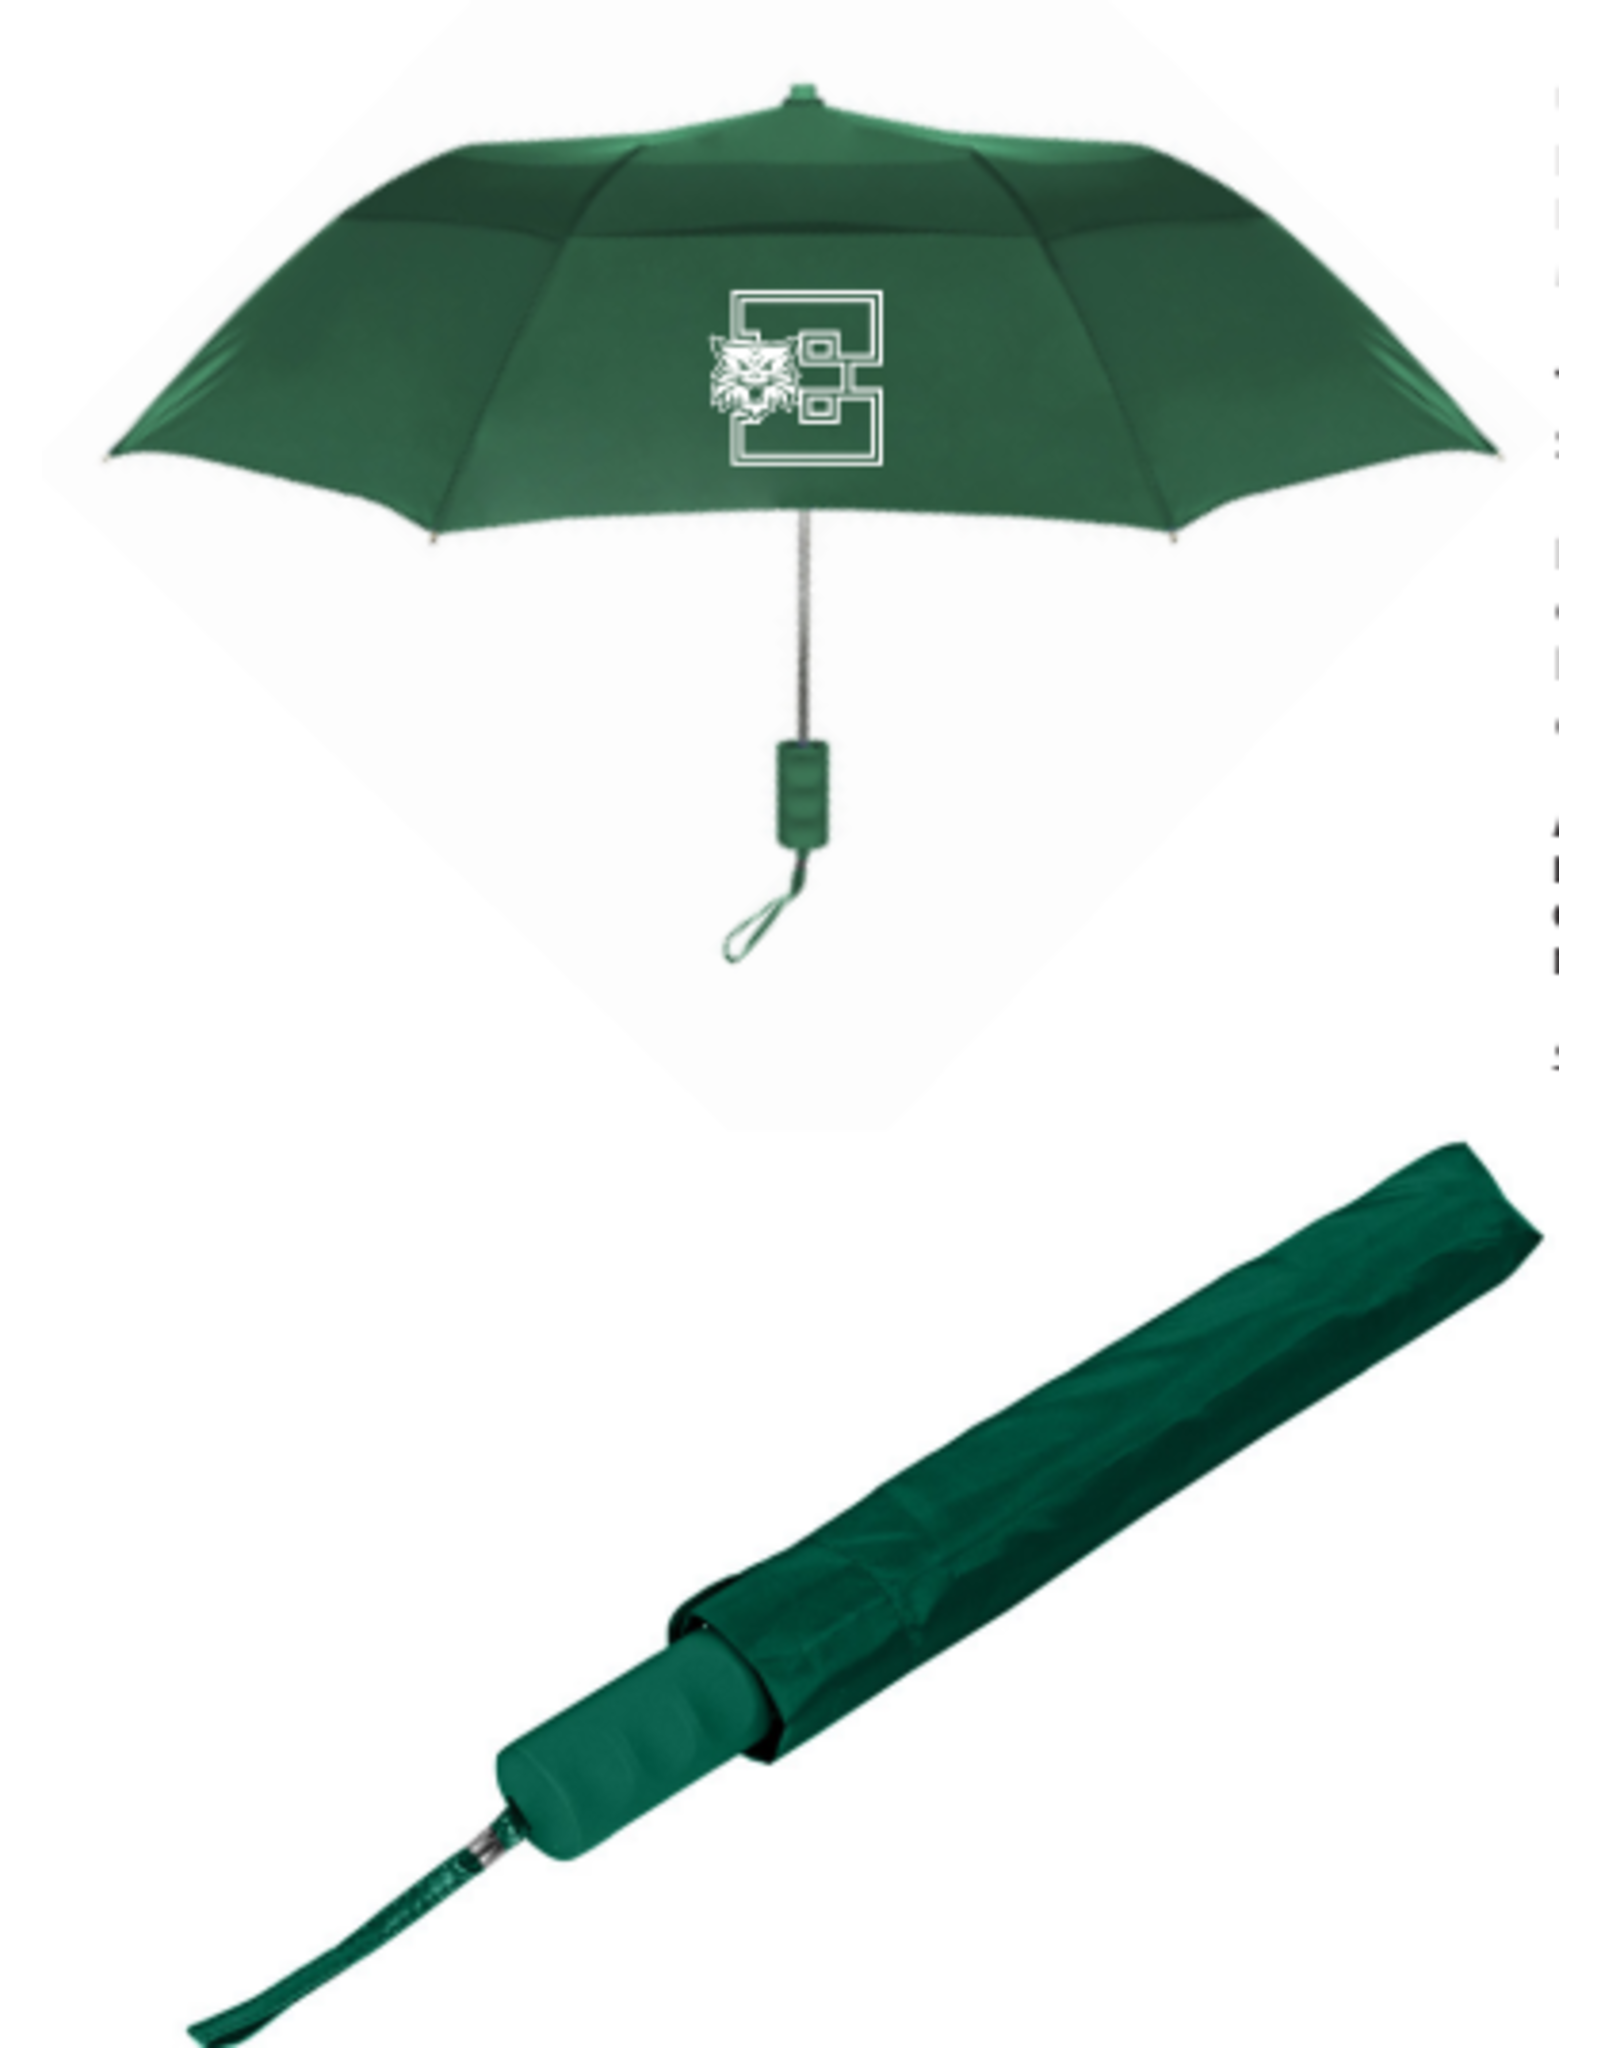 StrombergBrand Umbrellas Personal Umbrella